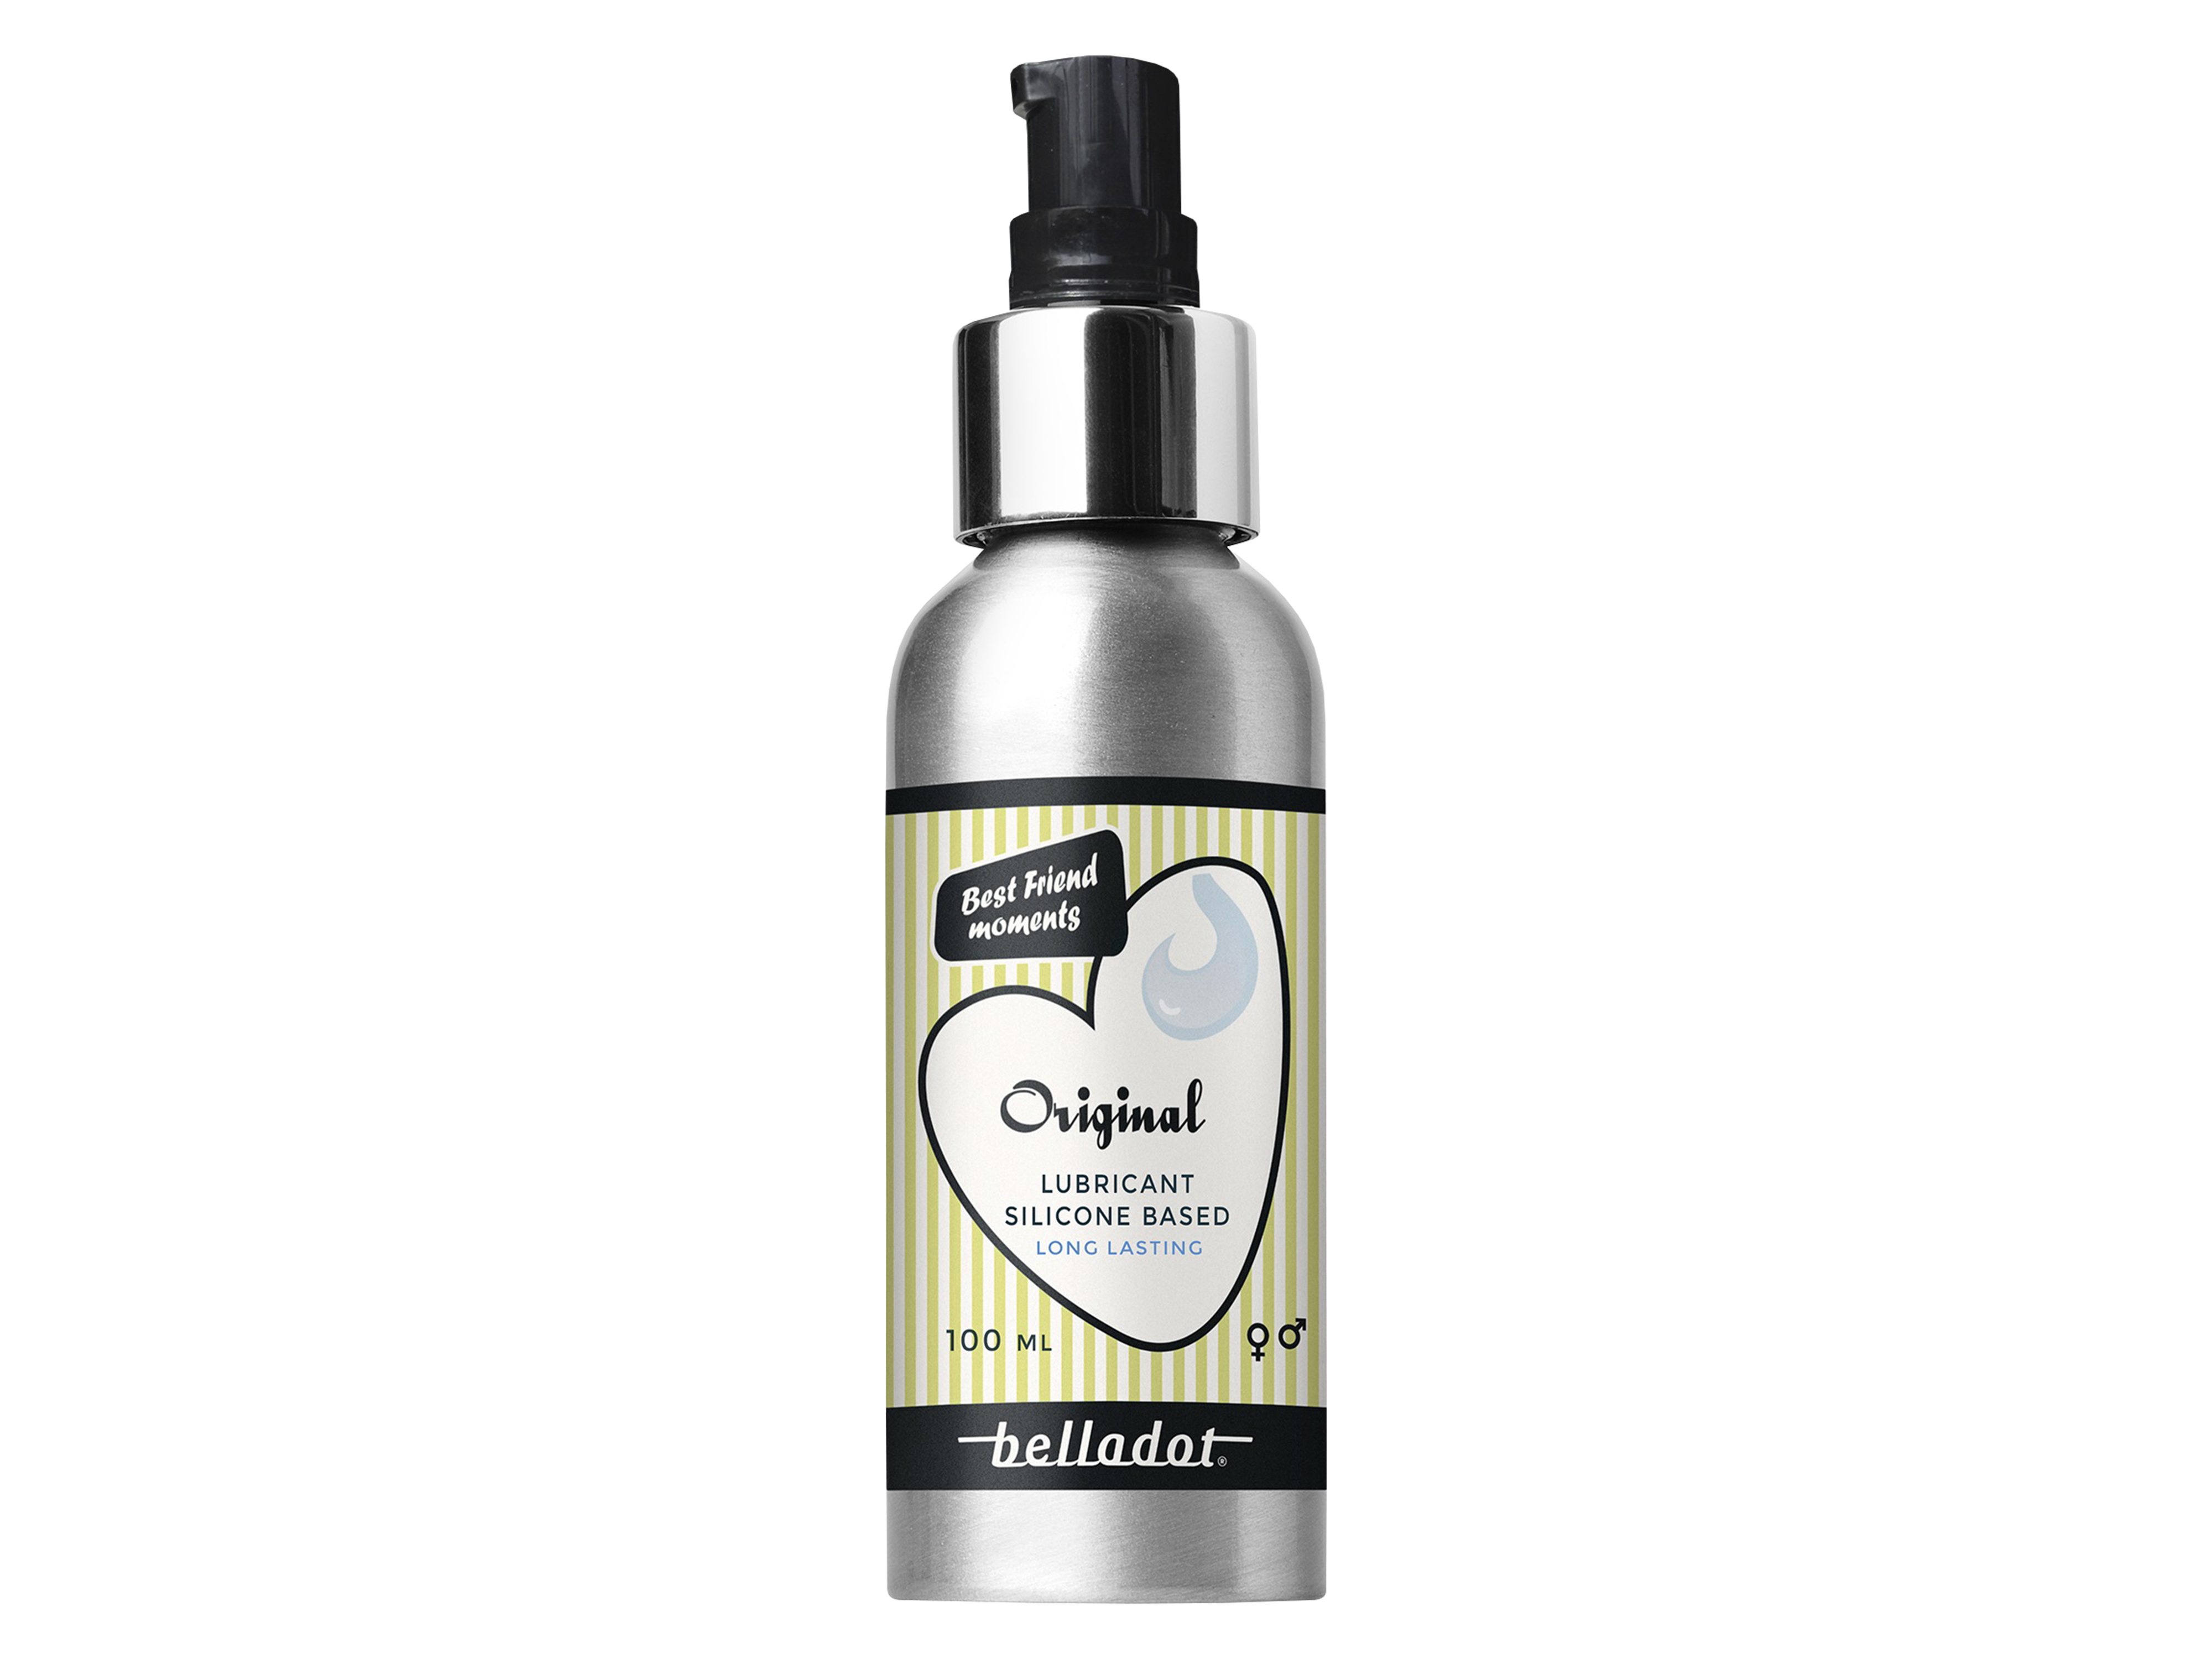 Belladot Belladot Original Lubricant Silicone Based Long Lasting, 100